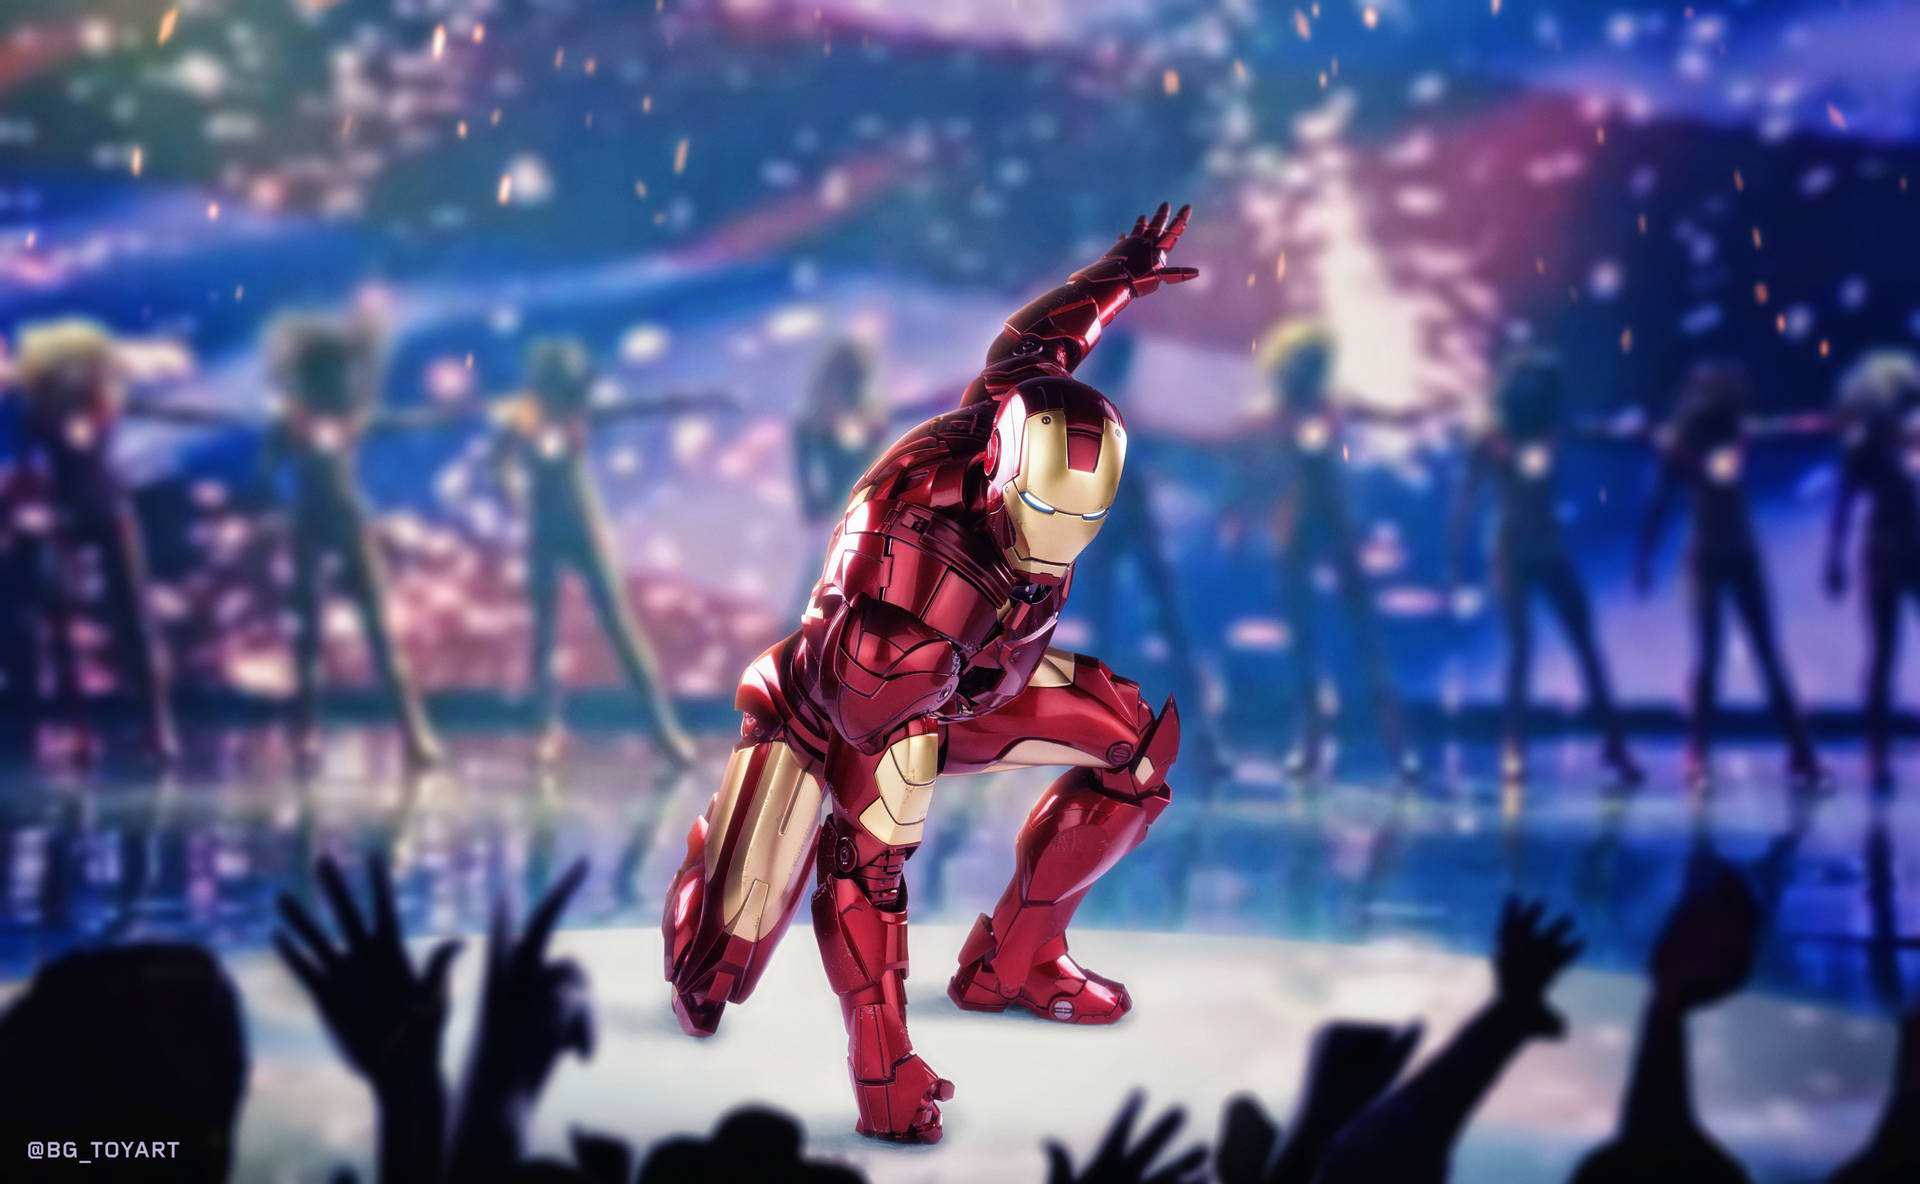 Cool Iron Man Landing On Stage Background